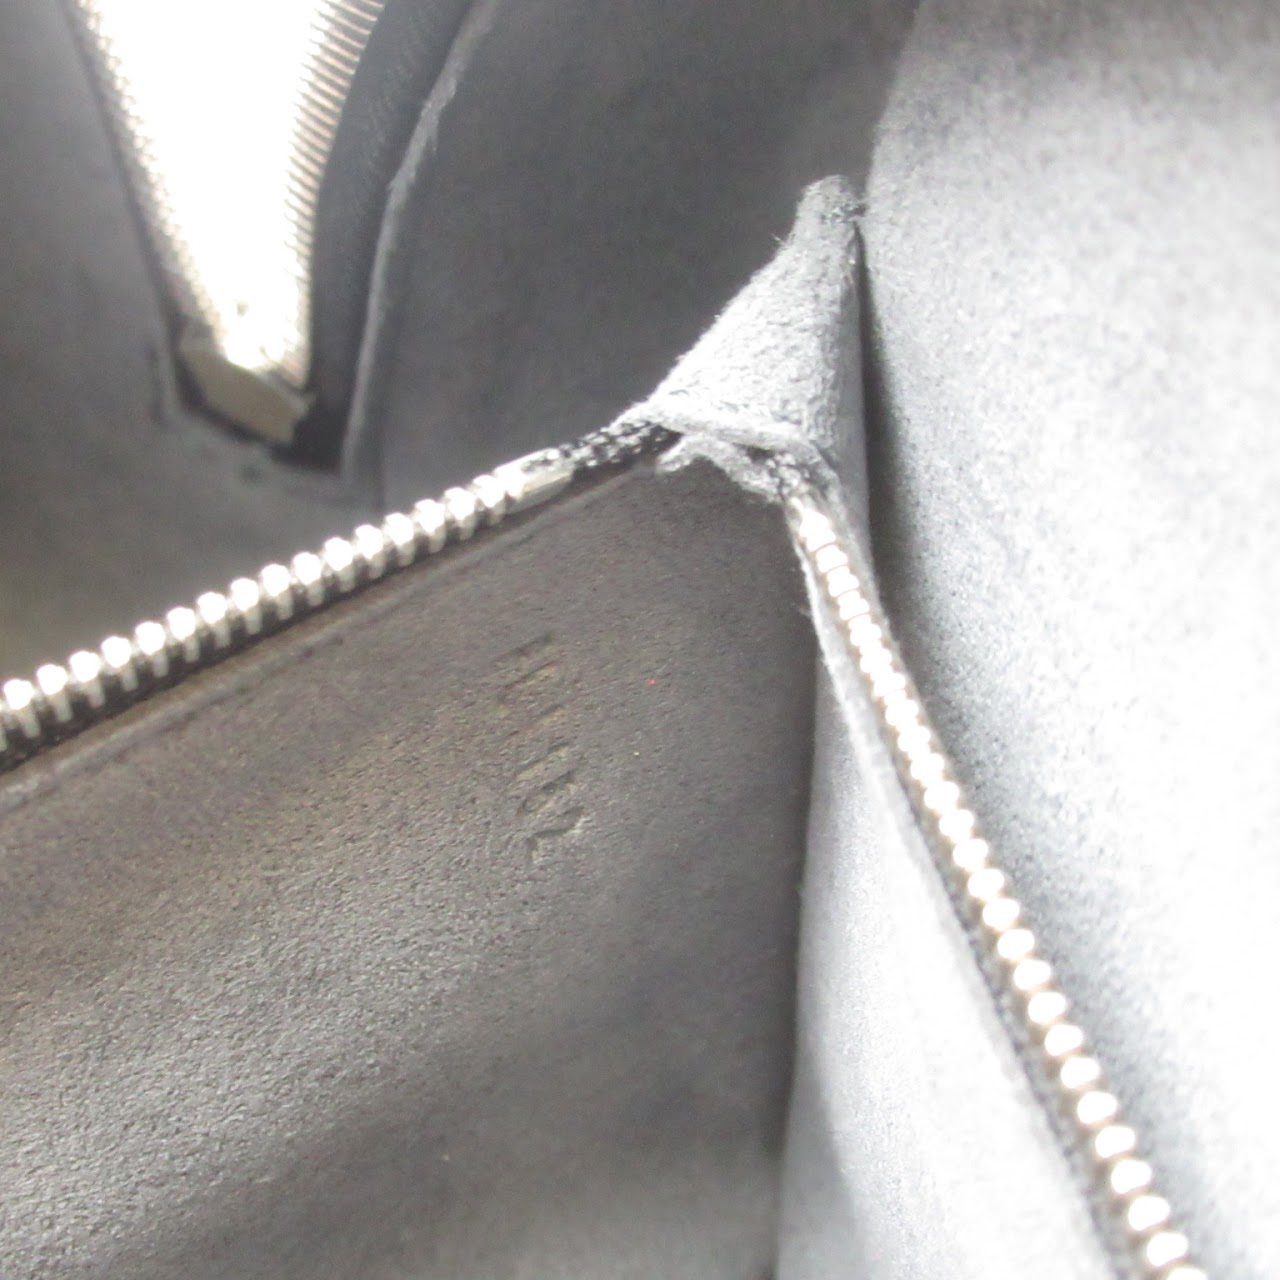 Louis Vuitton Bowling Type Handbag